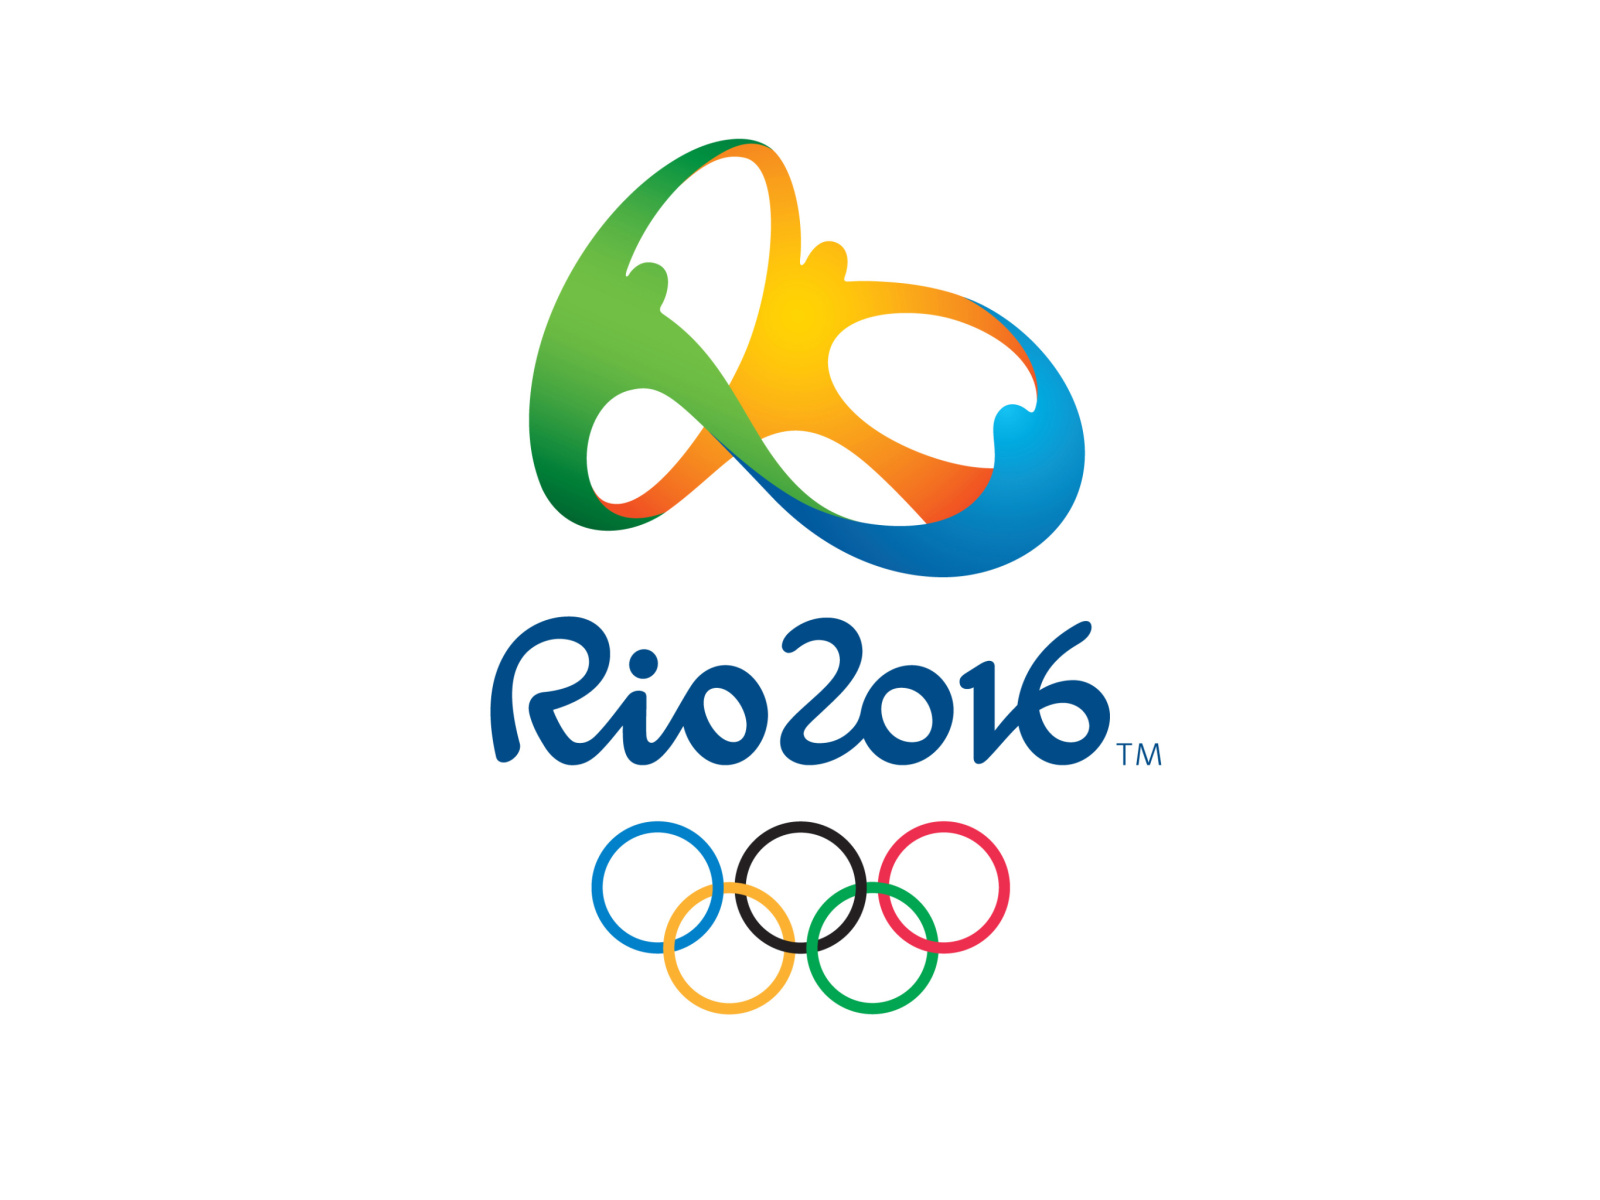 Rio 2016 Olympics Games wallpaper 1600x1200